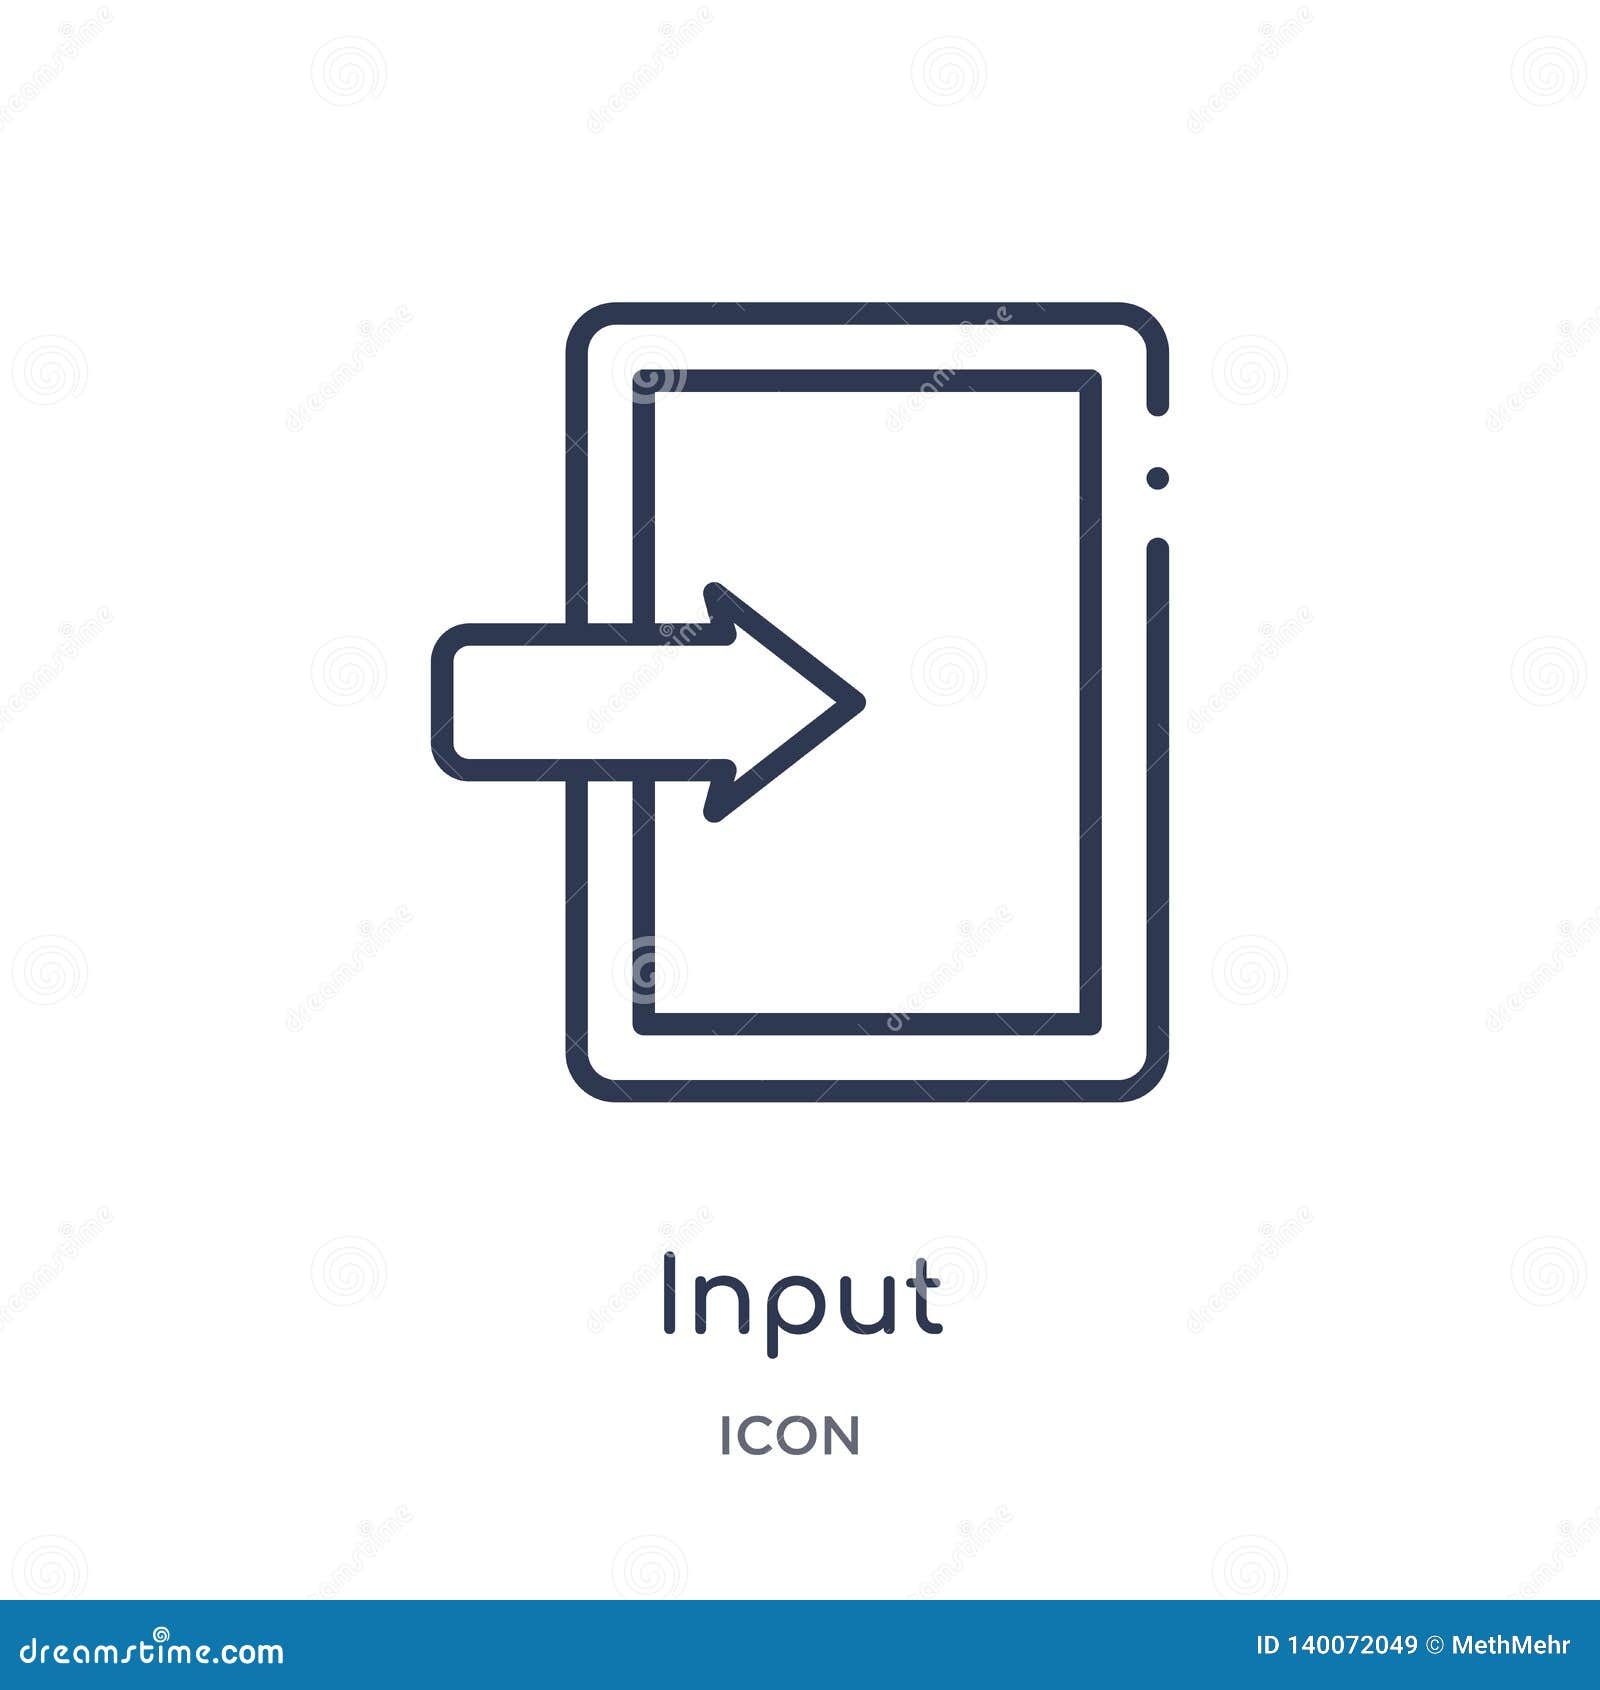 Input icon. Значок ввод. Иконки для input Bridge. Иконка input белая без фона.